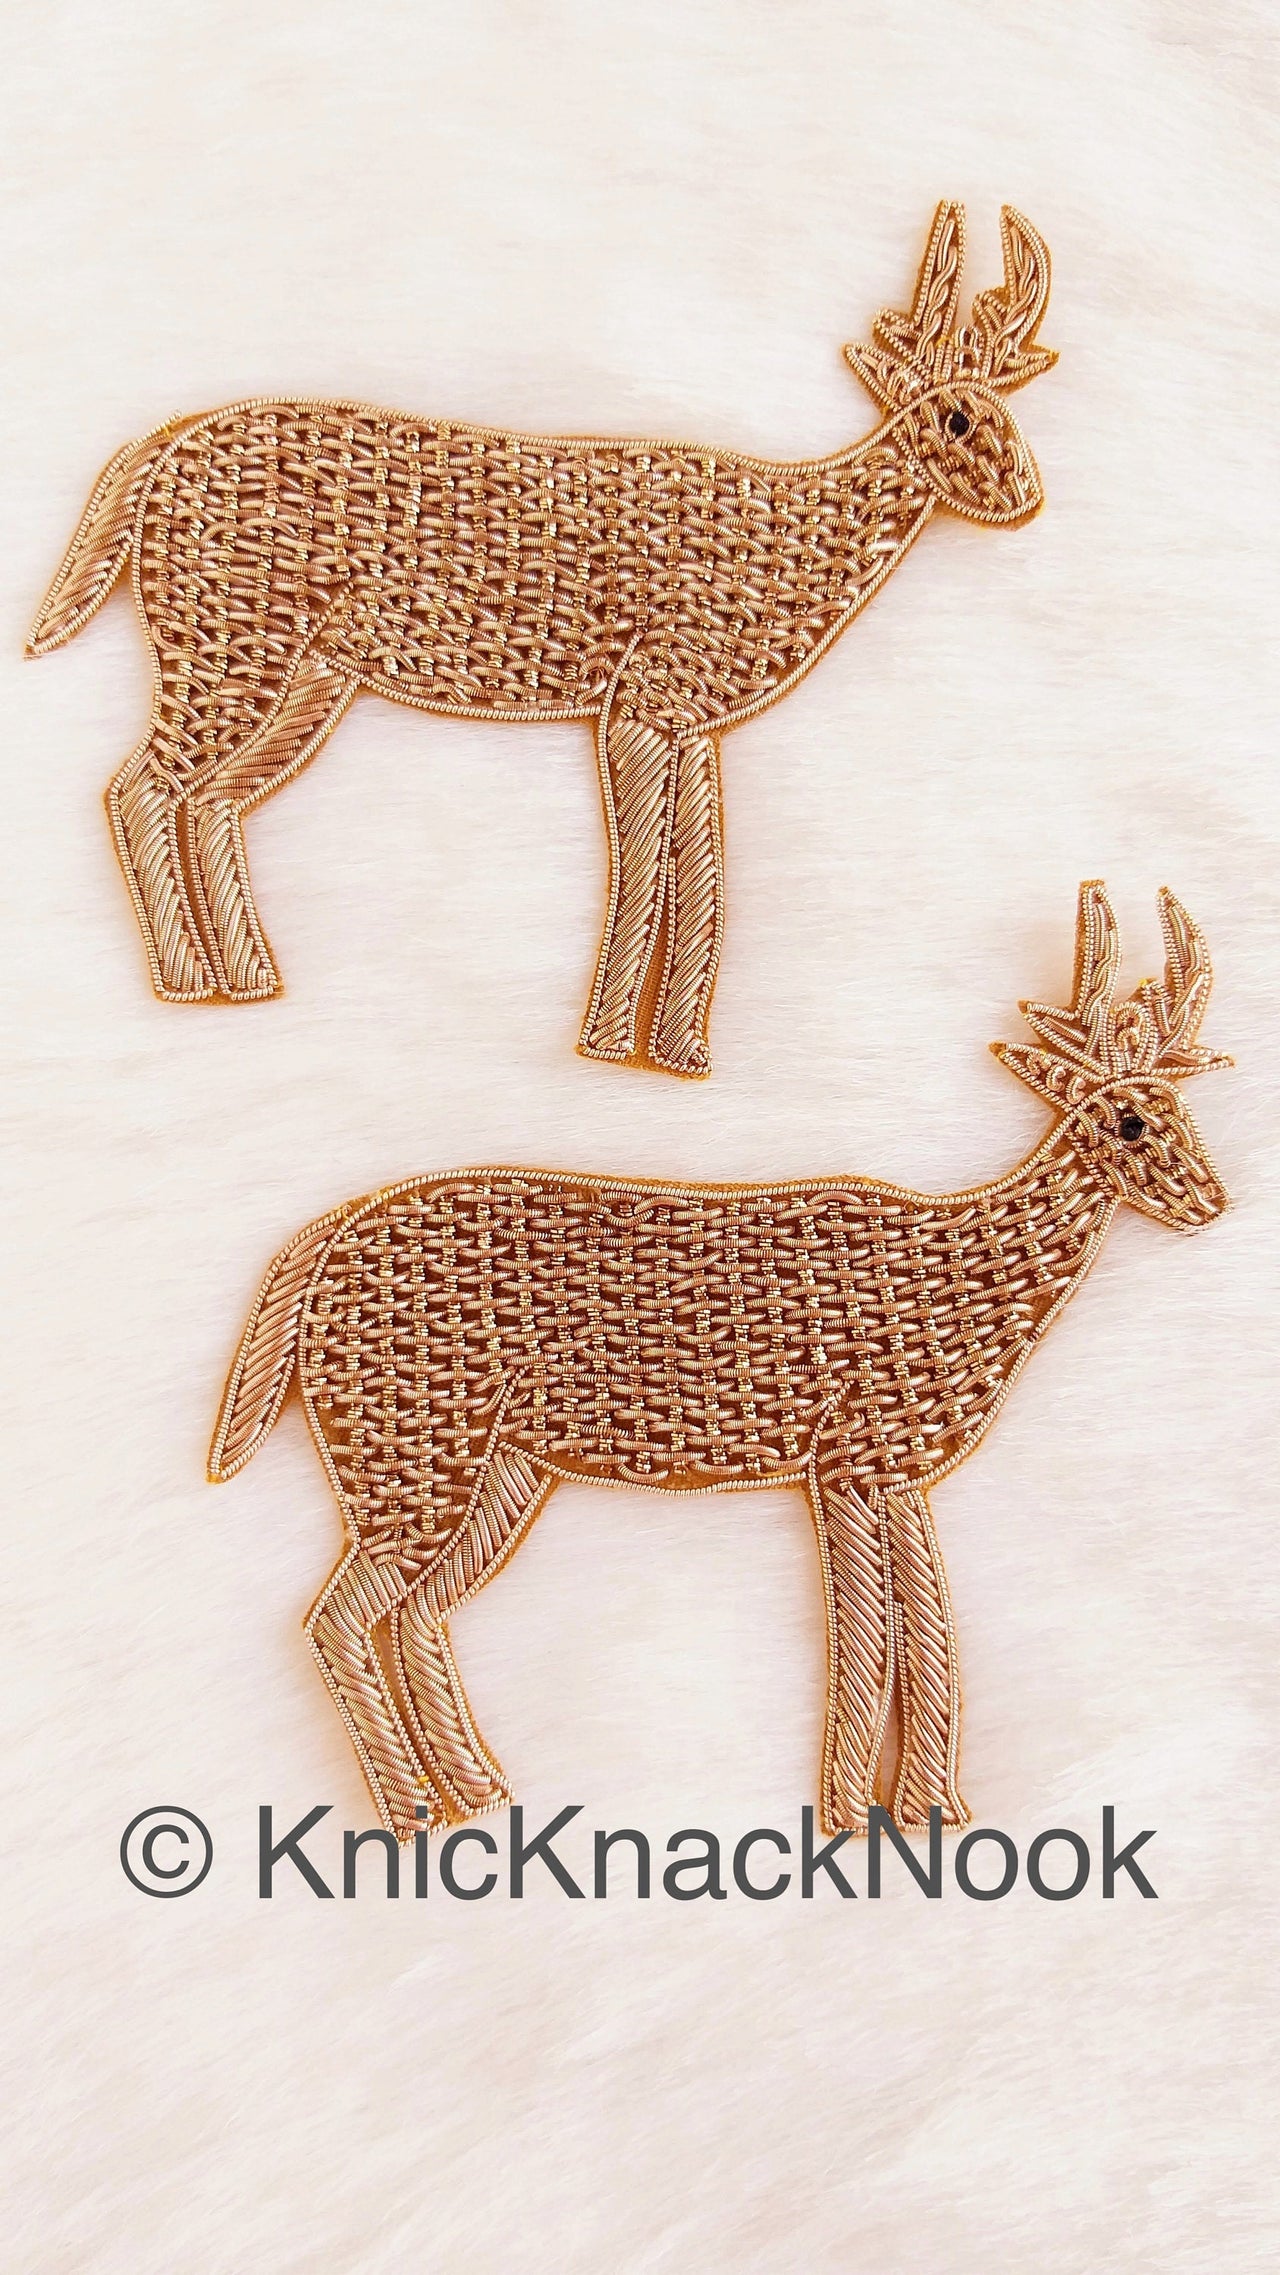 Hand Embroidered Deer Applique In Gold Zardozi Threadwork, Animal Motif, Indian Embellishment